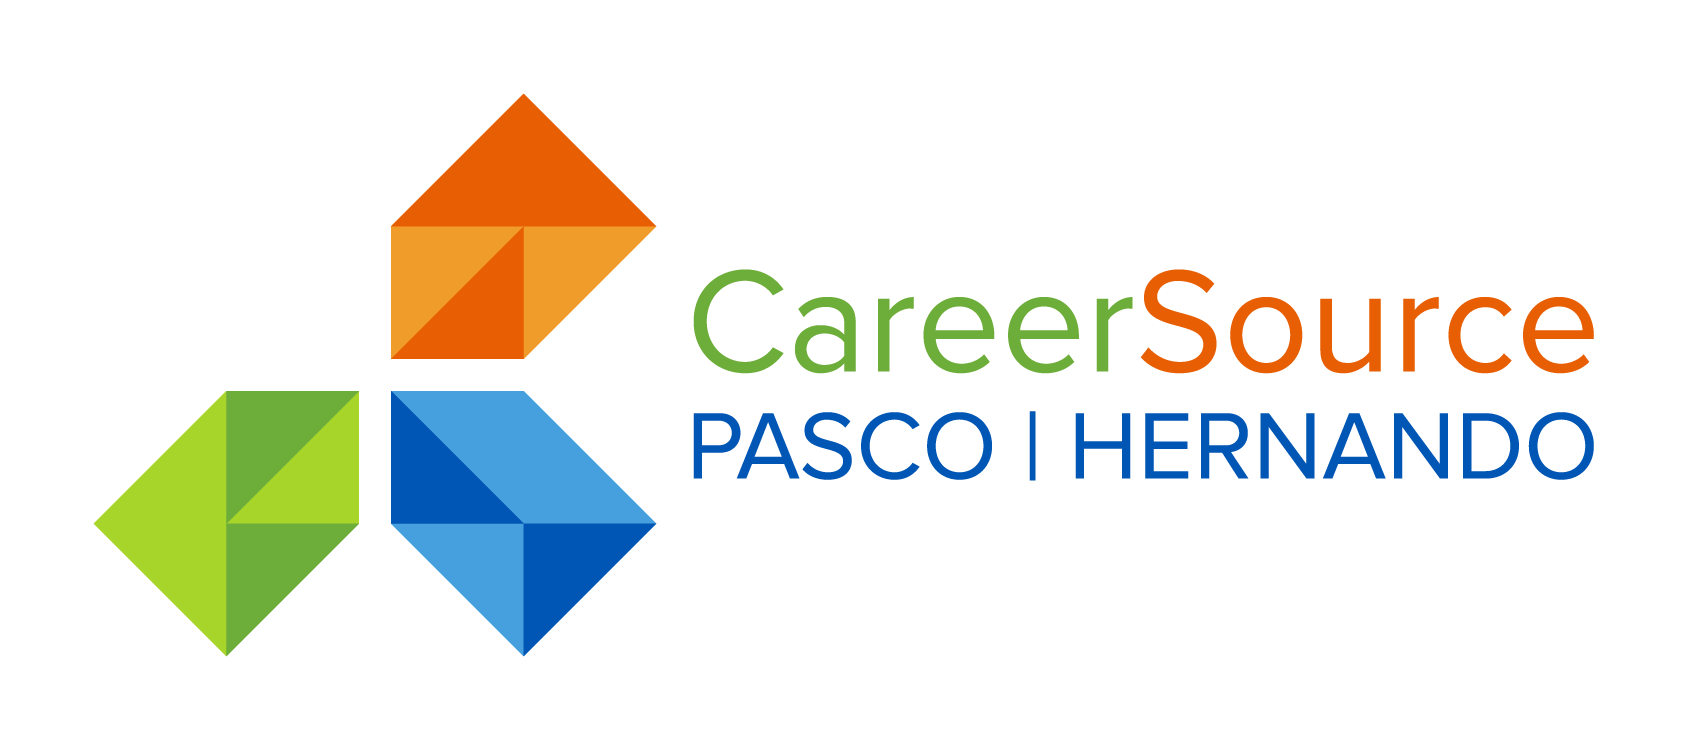 CareerSource Pasco Hernando logo